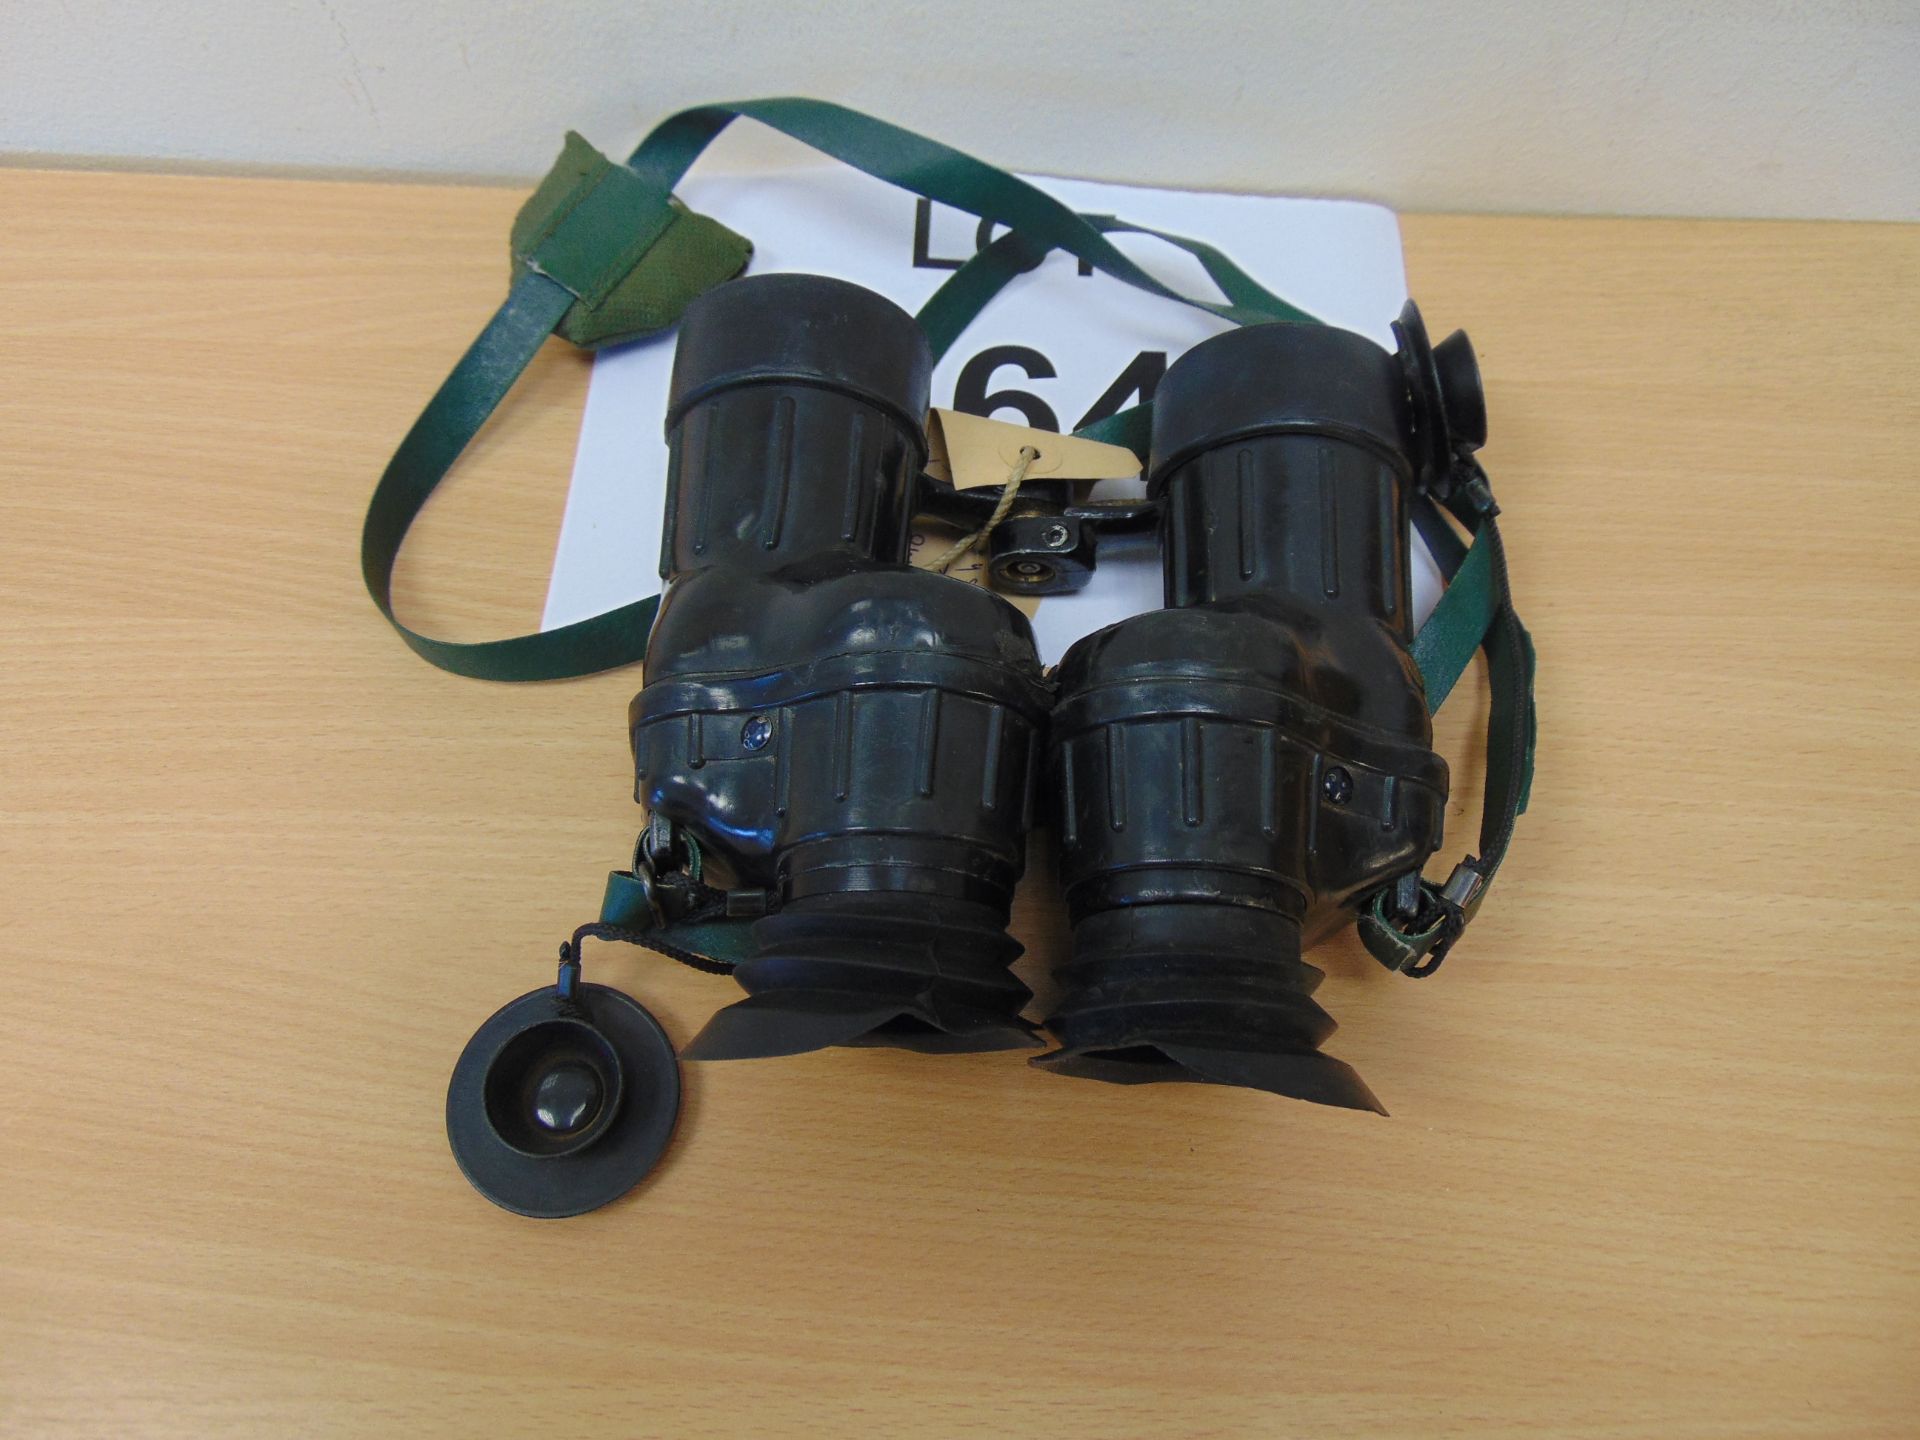 1 x Pair of Avimo L12A1 7x42 self focusing British Army Binos c/w Filters - Image 5 of 5